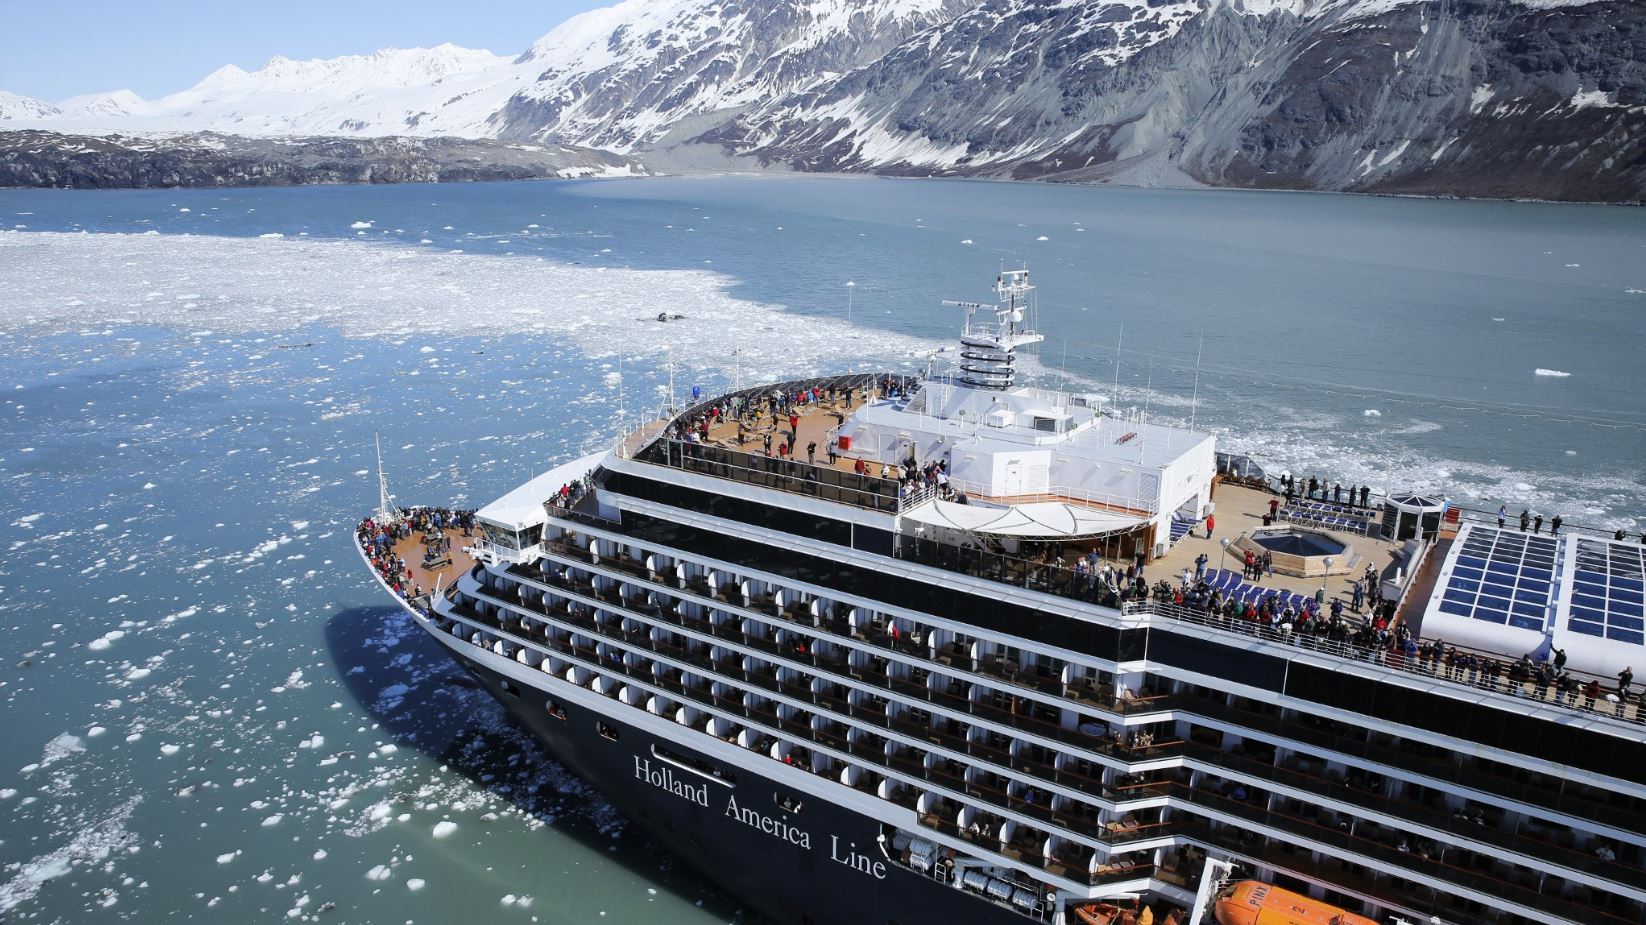 Holland America Line retains title as ‘Top Alaska Cruise Line’ CRUISE